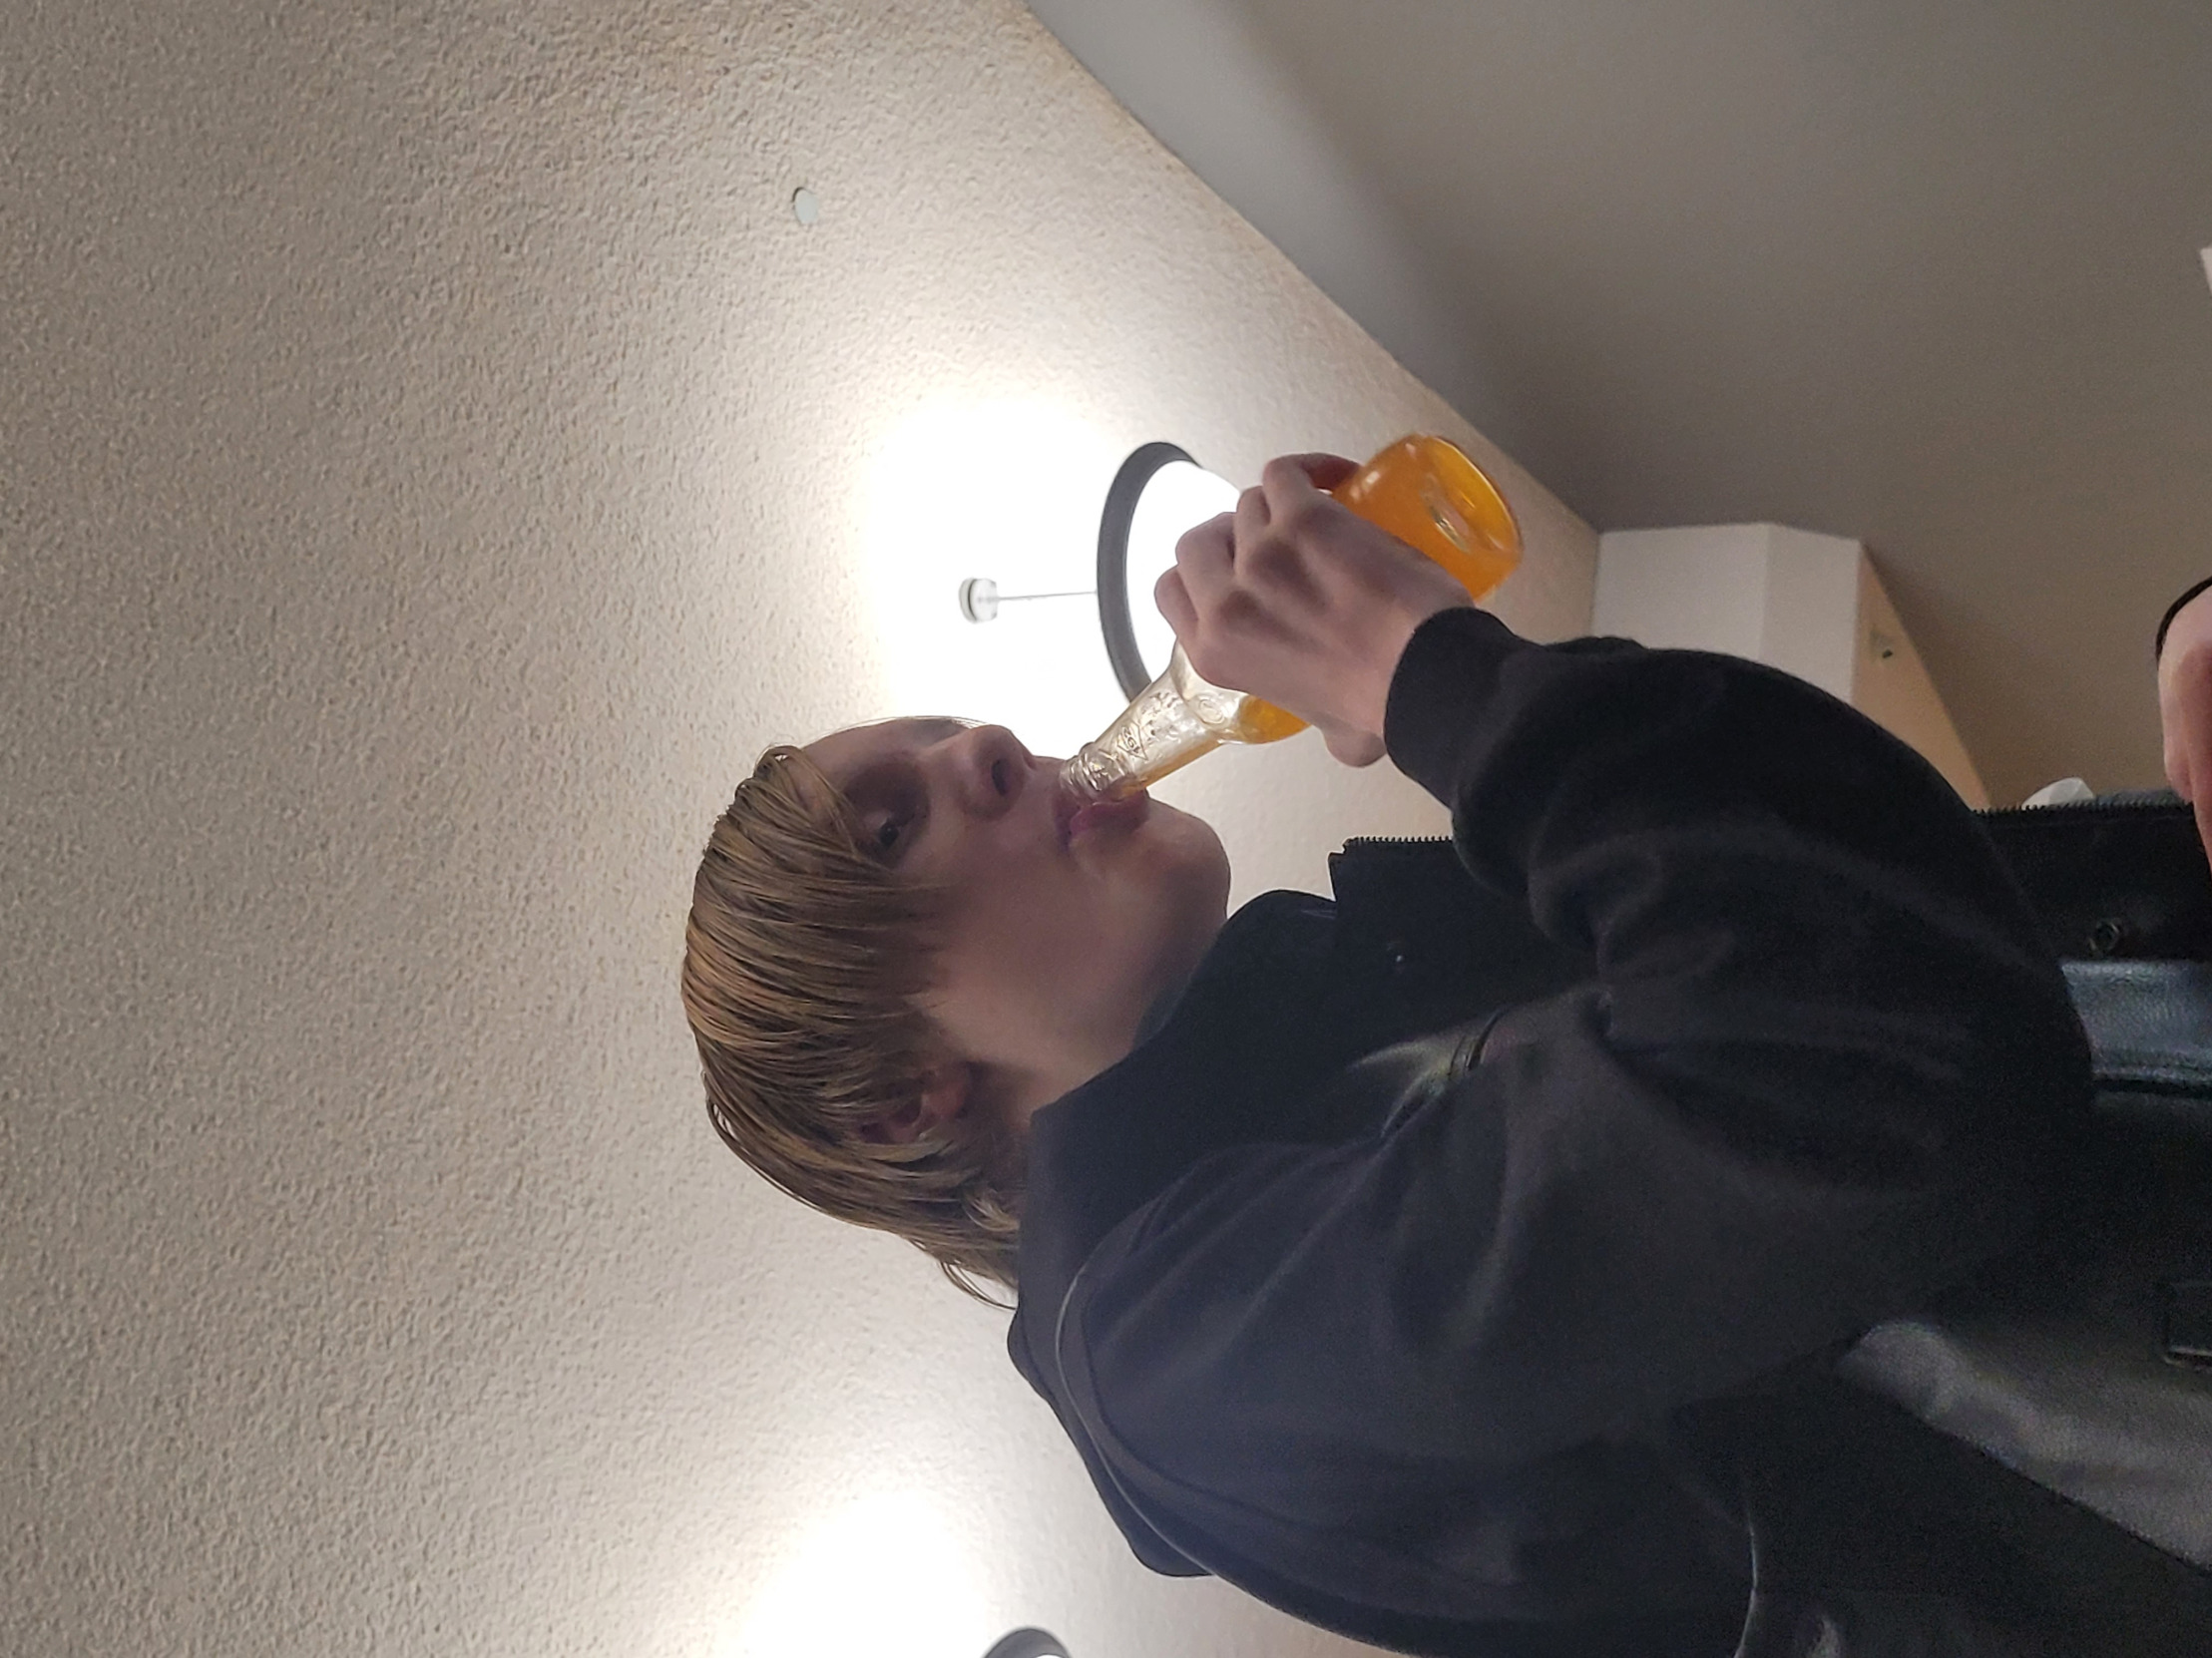 Greasy receding hairline teen drinking orange soda Blank Meme Template